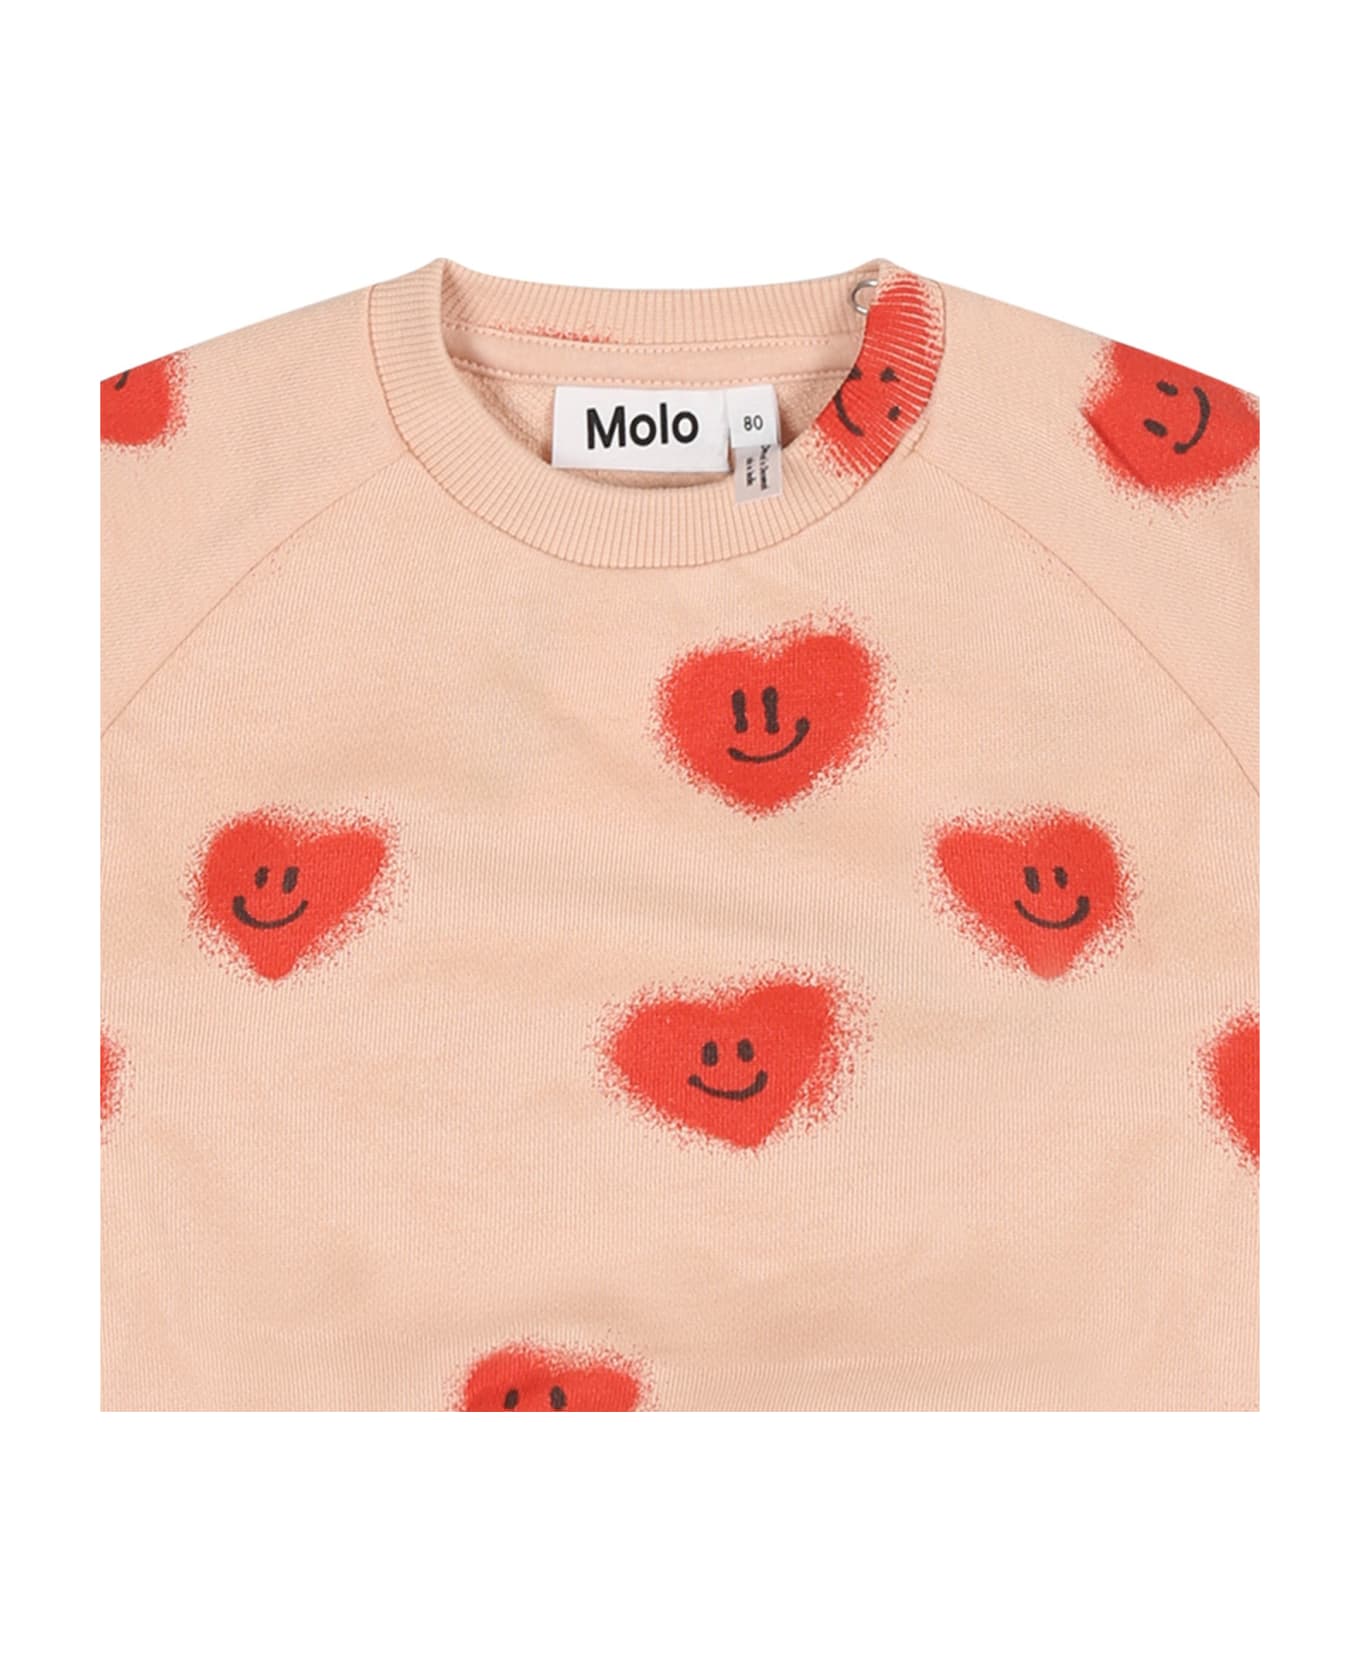 Molo Pink Sweatshirt For Baby Girl With Smiley - Pink